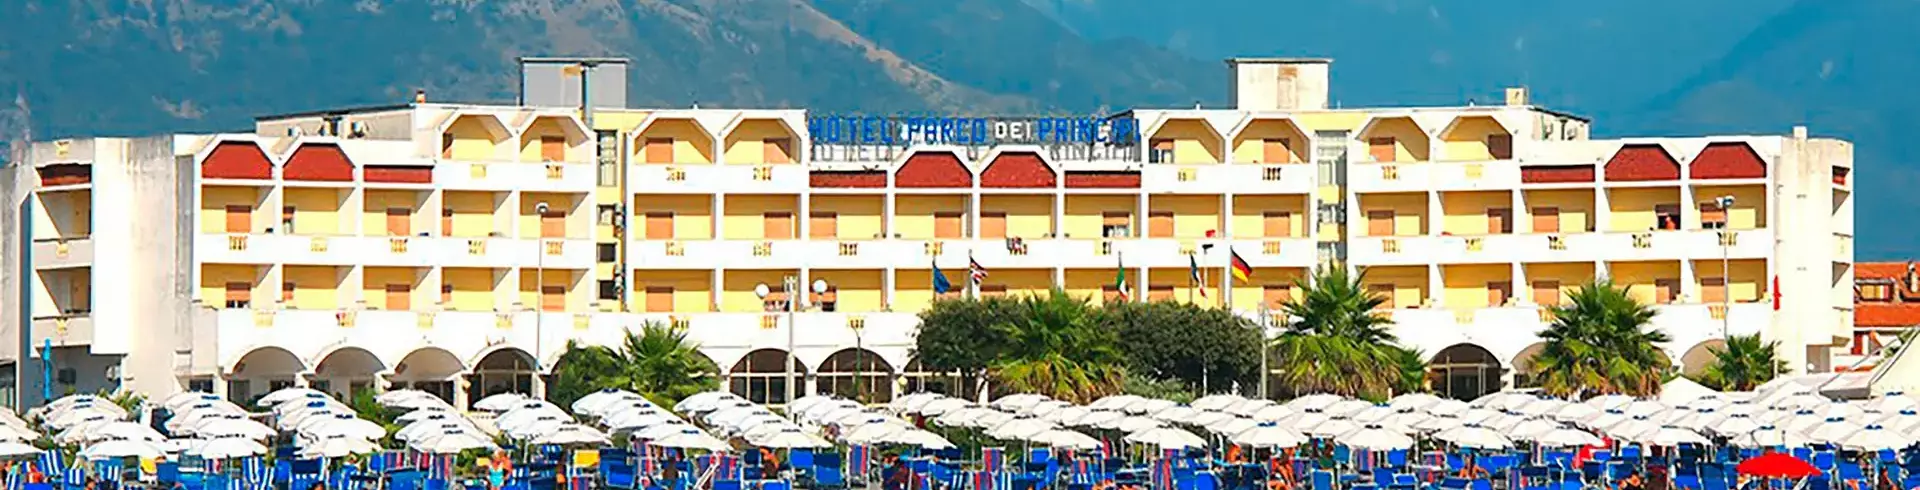 Parco Dei Principi - Hotel Club